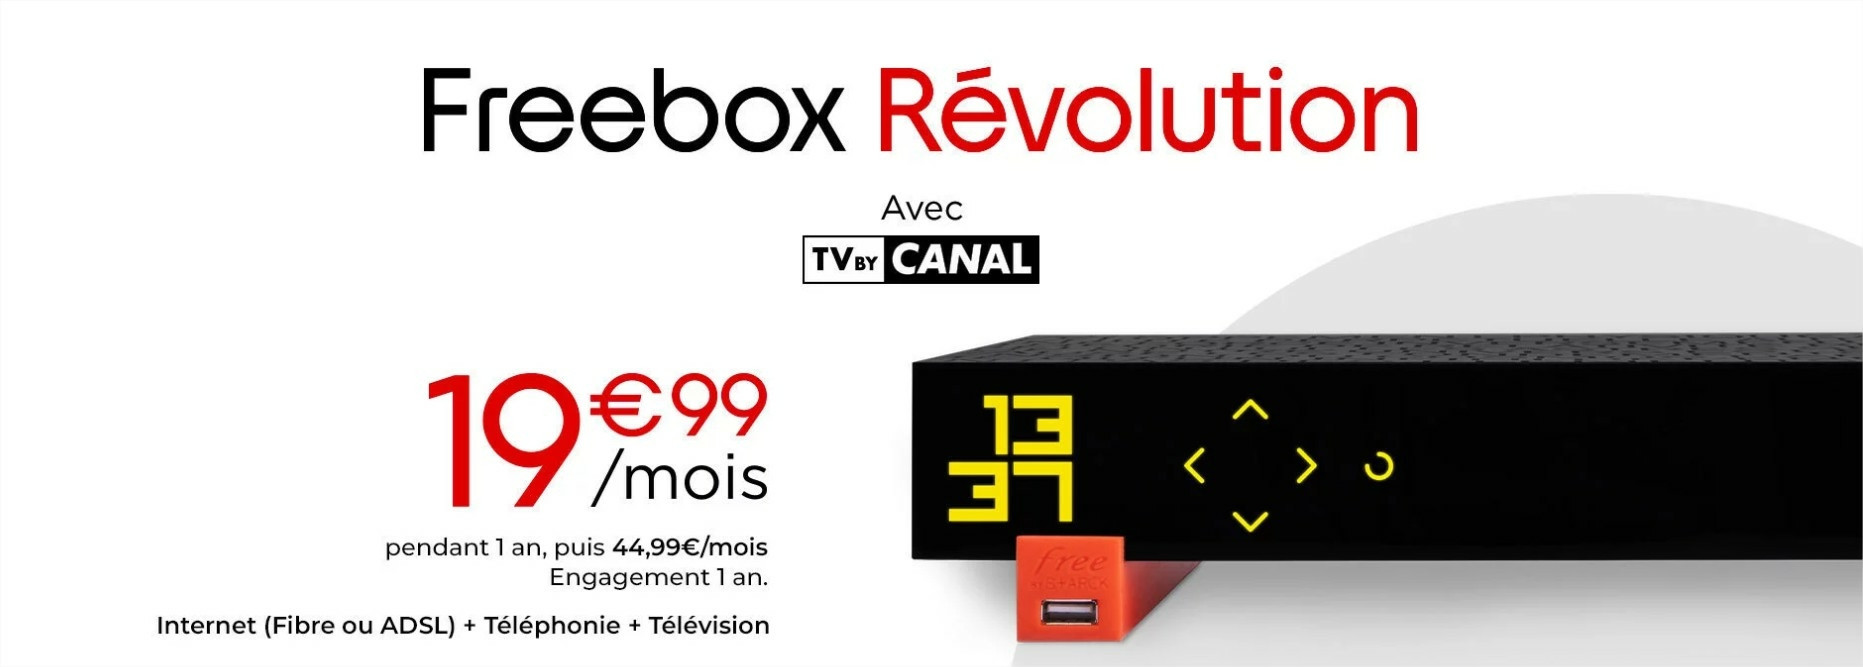 freebox revolution